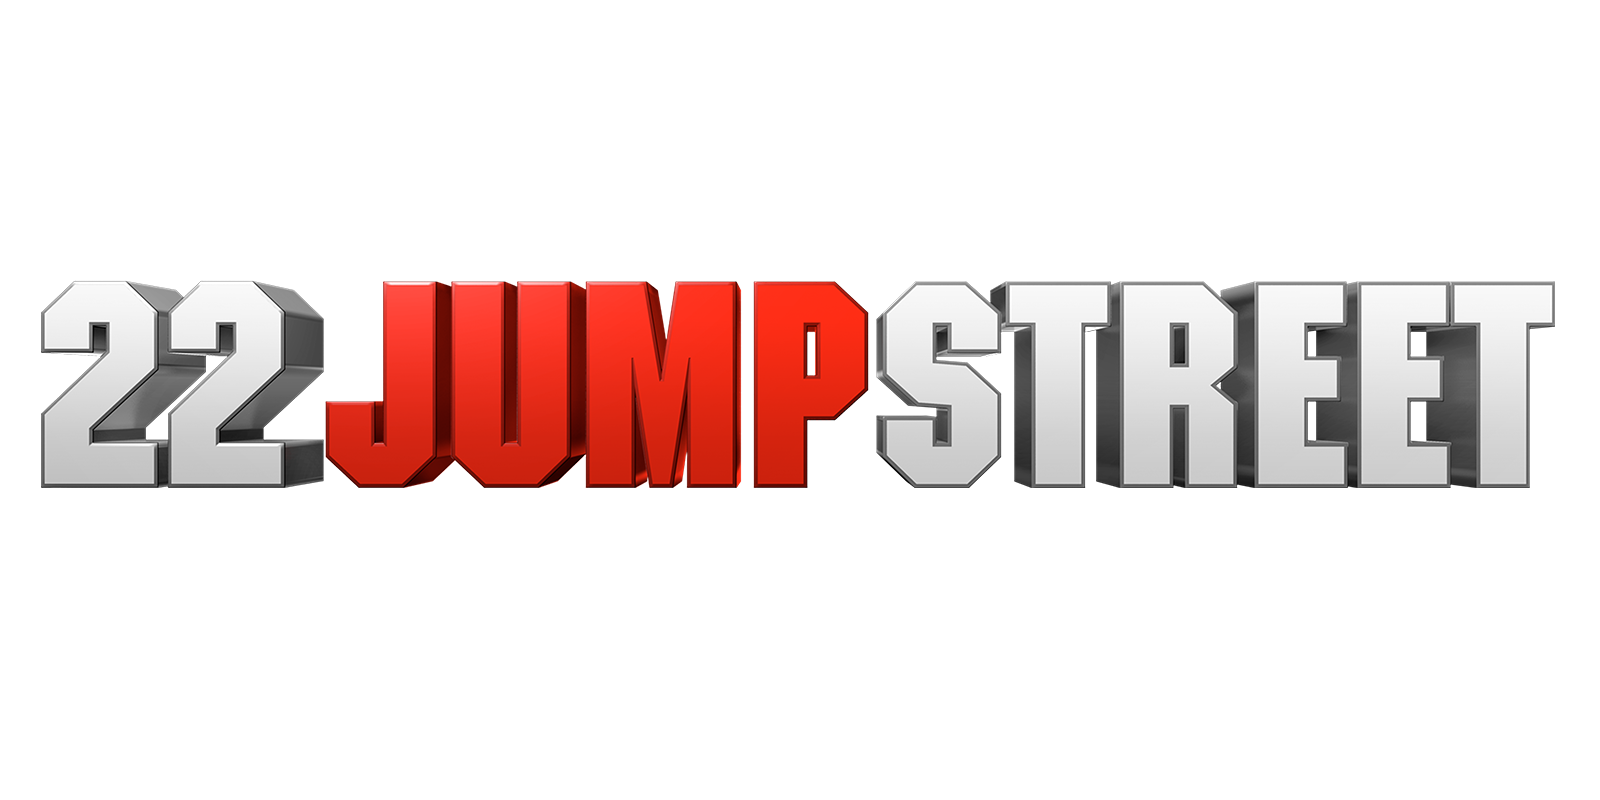 22 jump street full movie download free